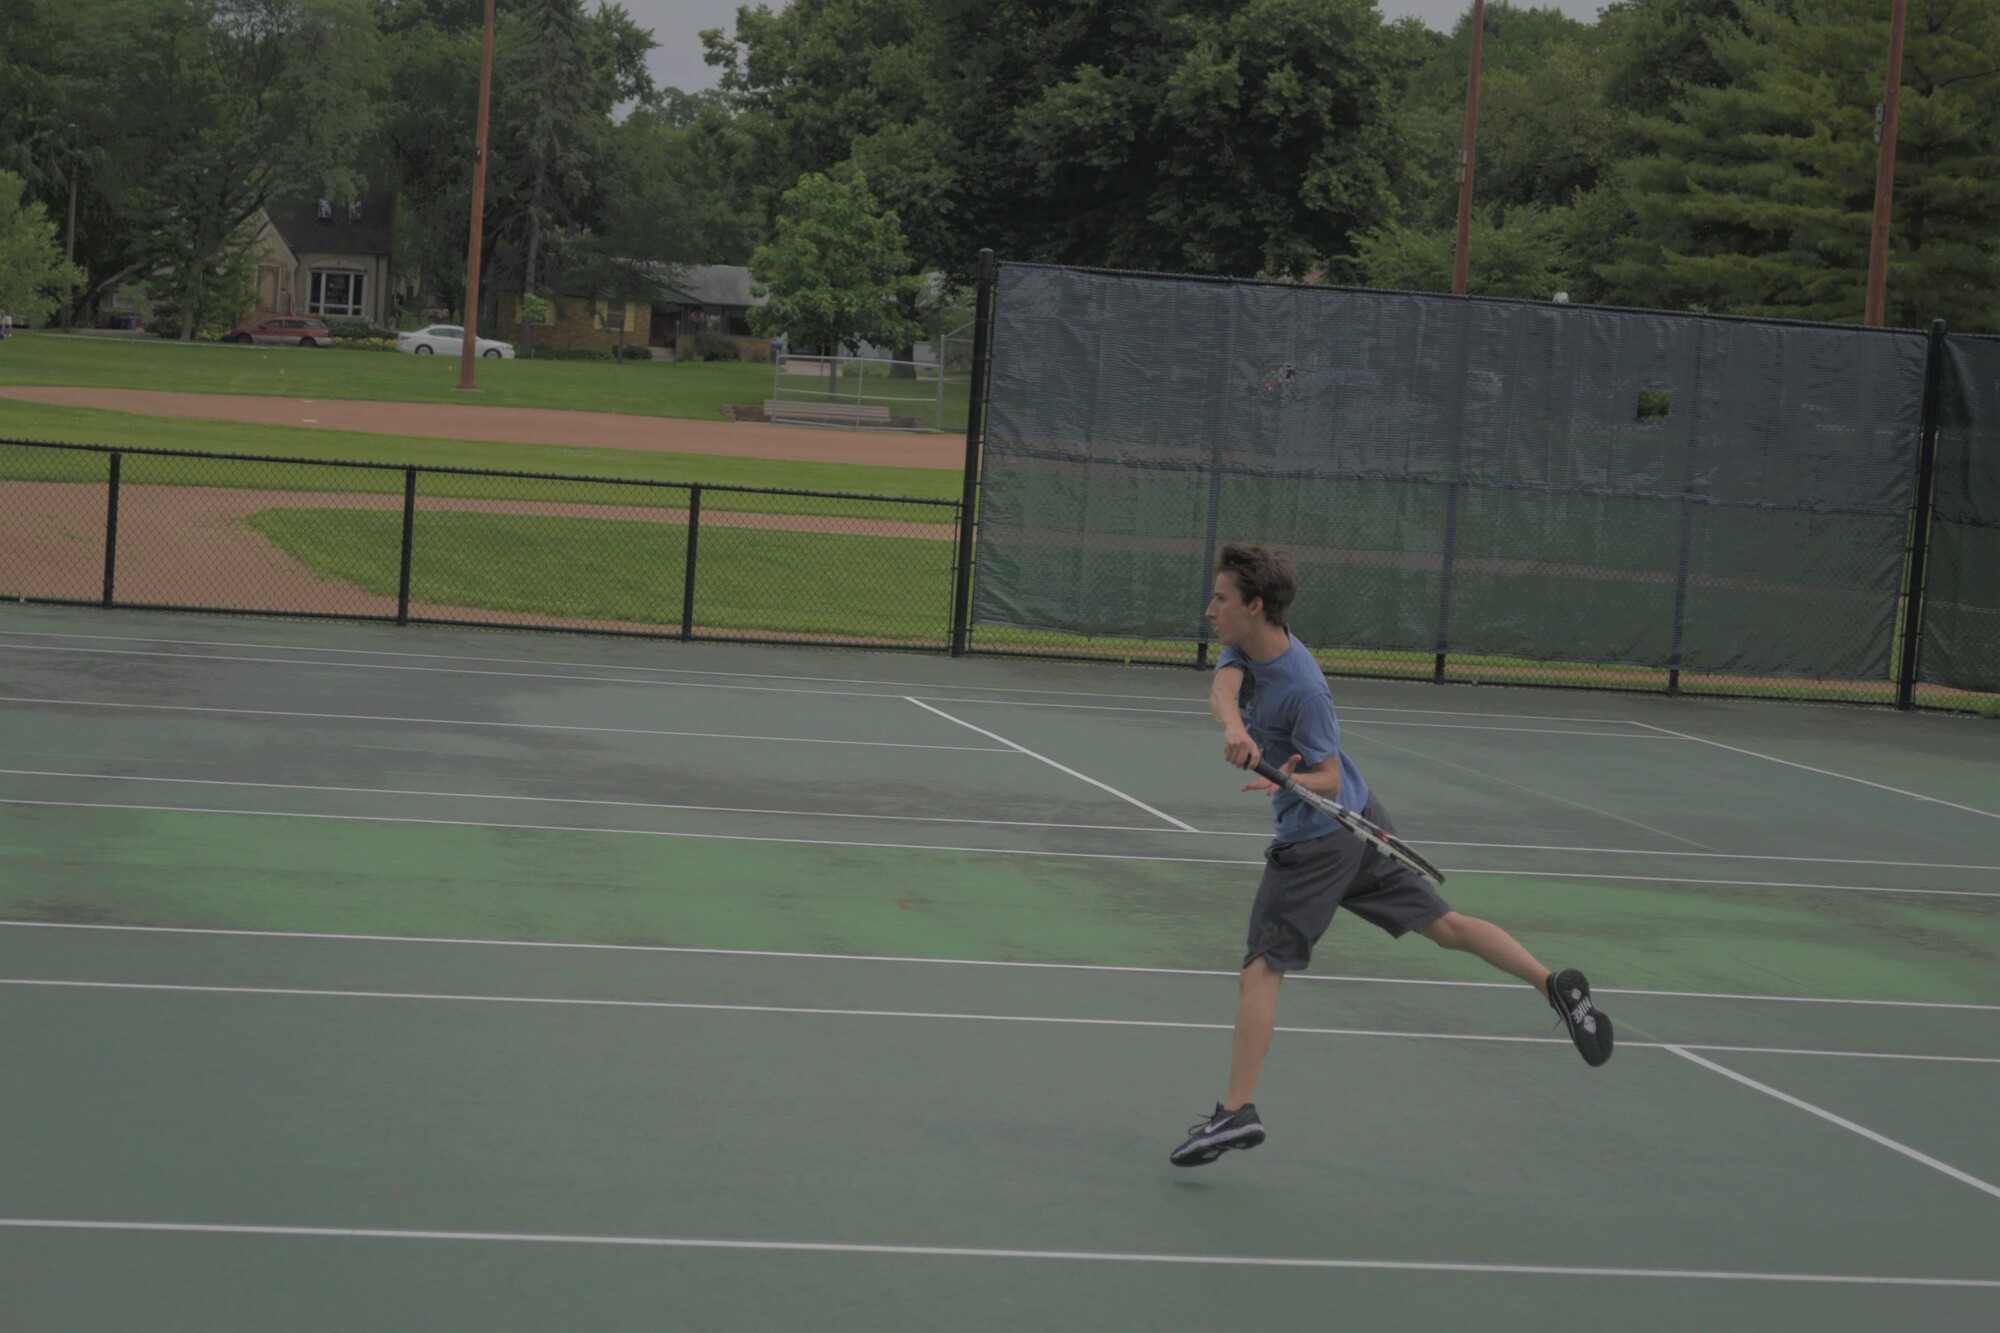 David K. teaches tennis lessons in St. Louis Park, MN